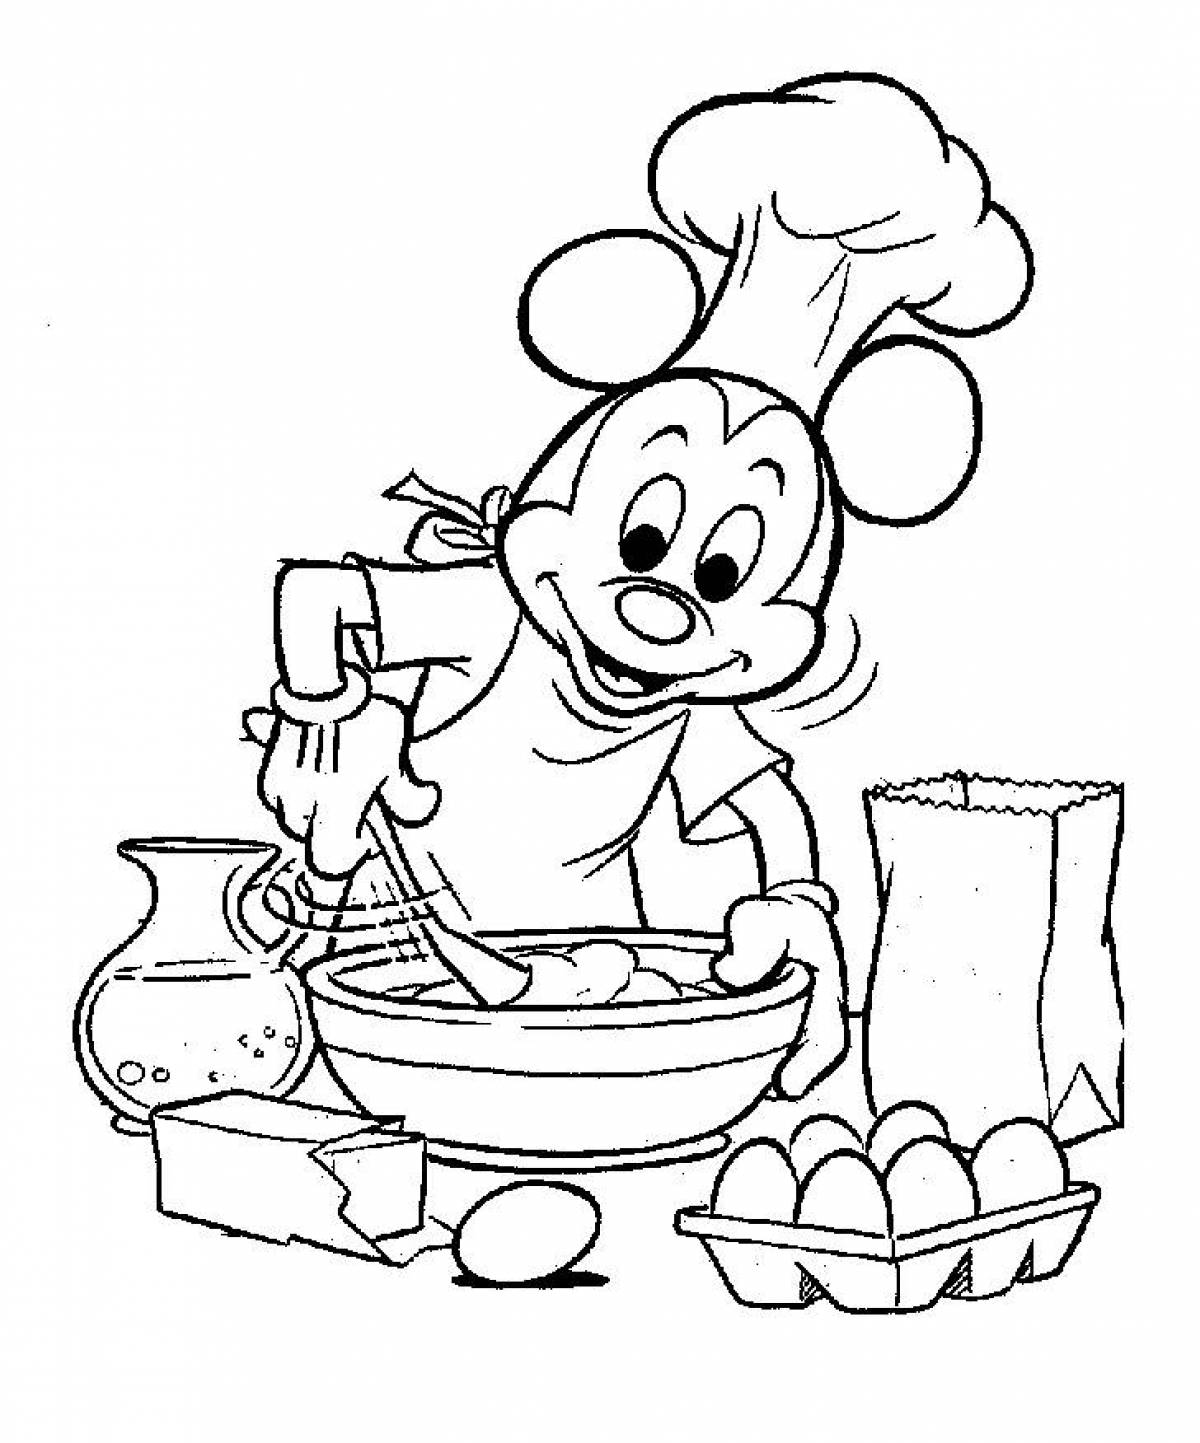 Mickey the chef